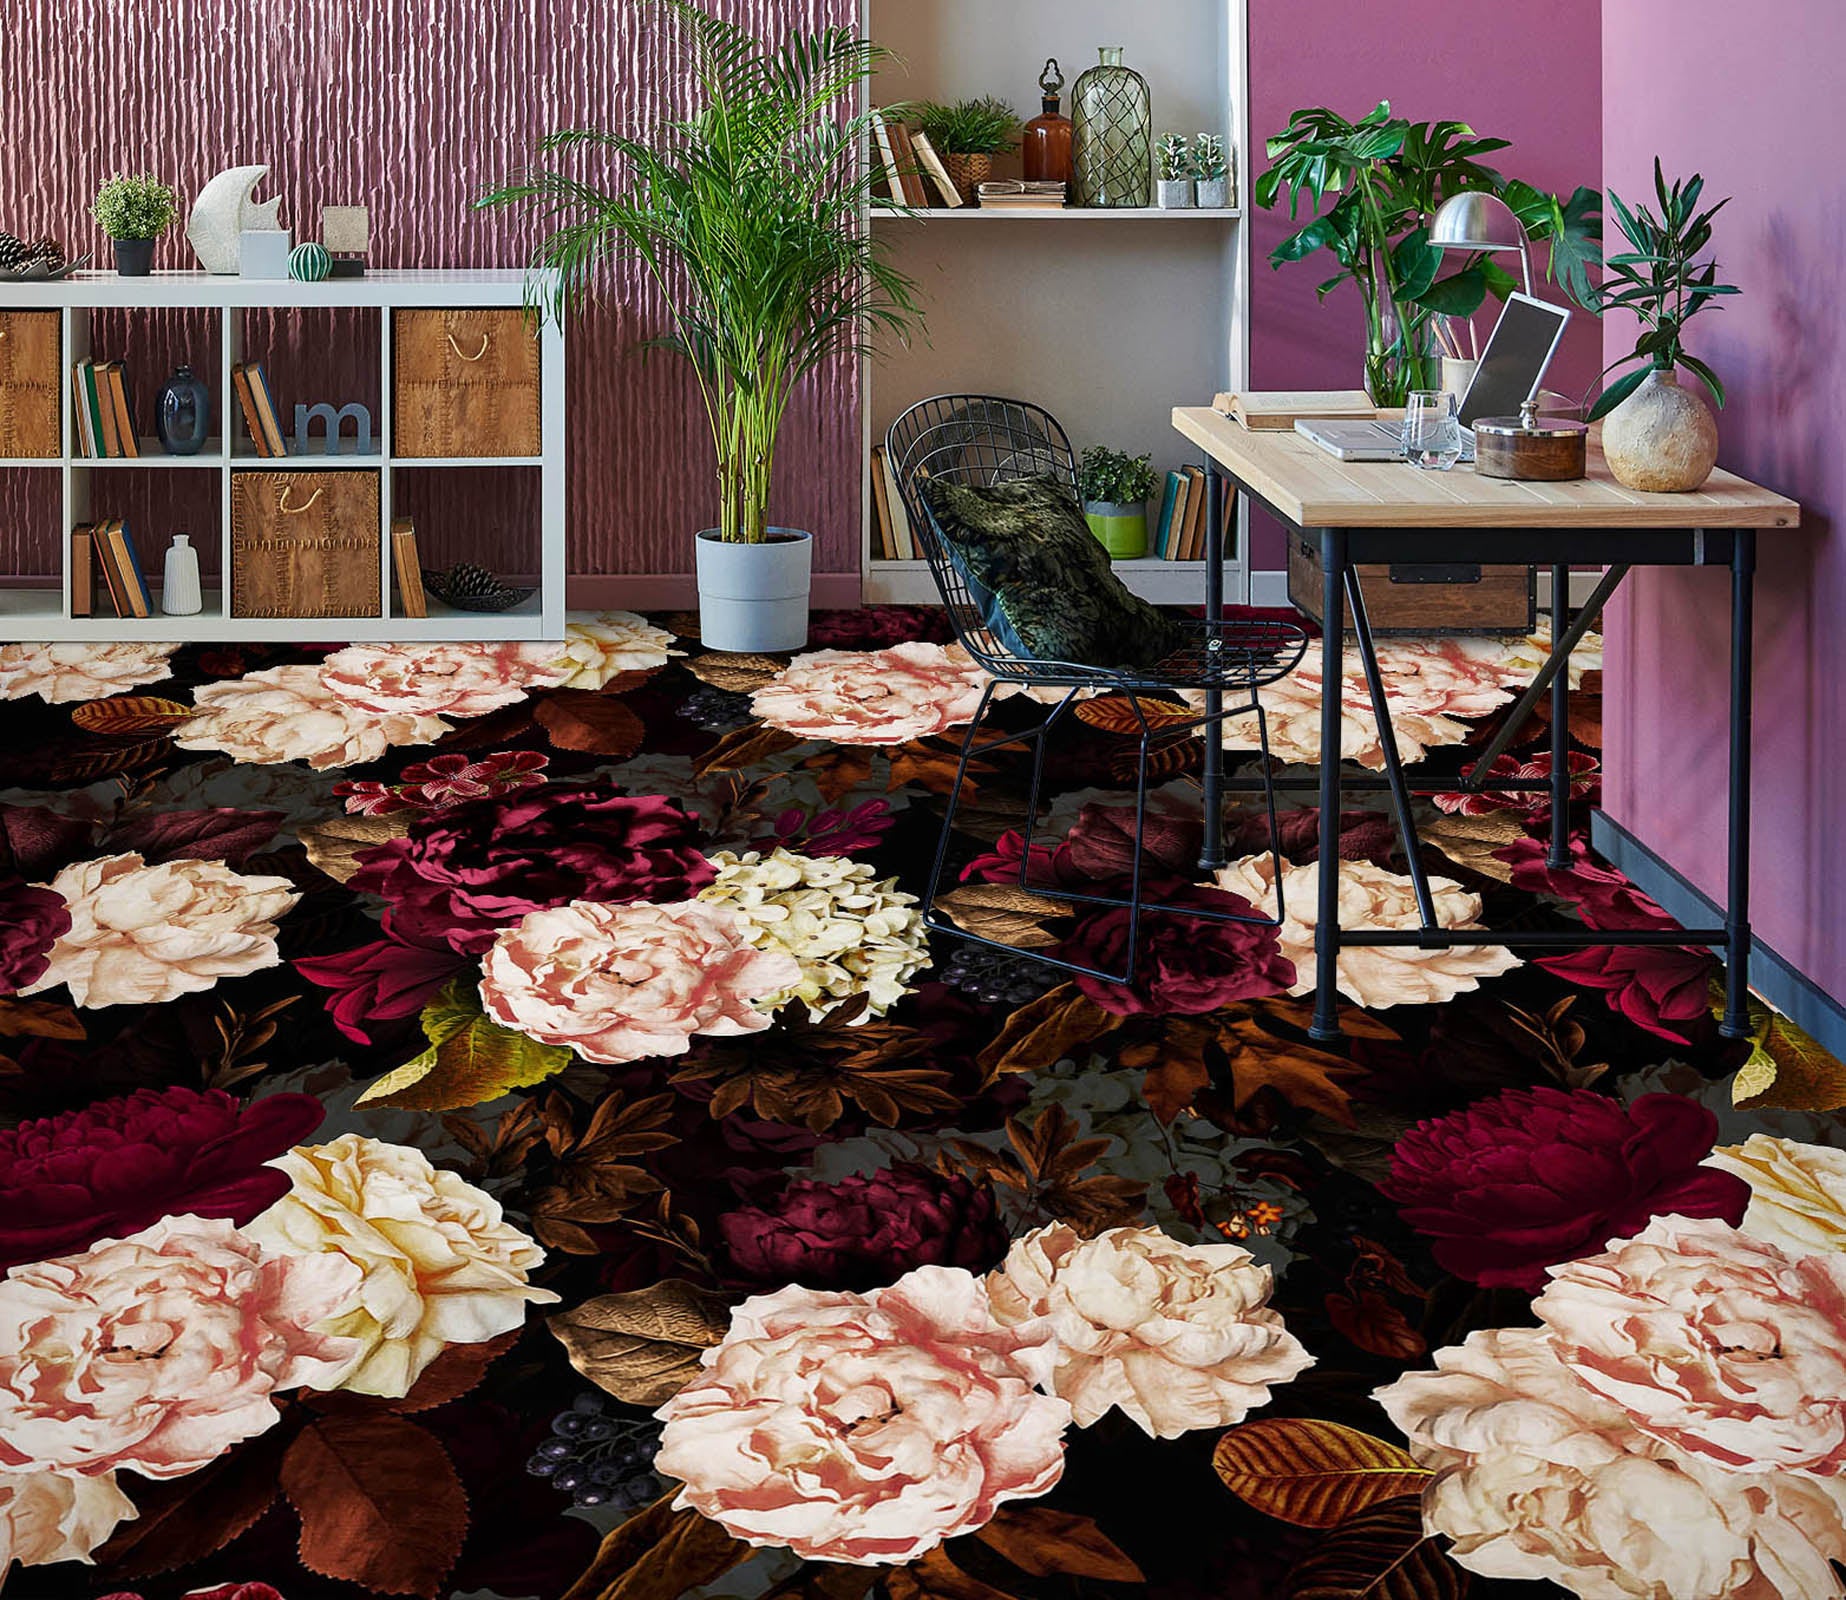 3D Pink Red Flowers 99217 Uta Naumann Floor Mural  Wallpaper Murals Self-Adhesive Removable Print Epoxy